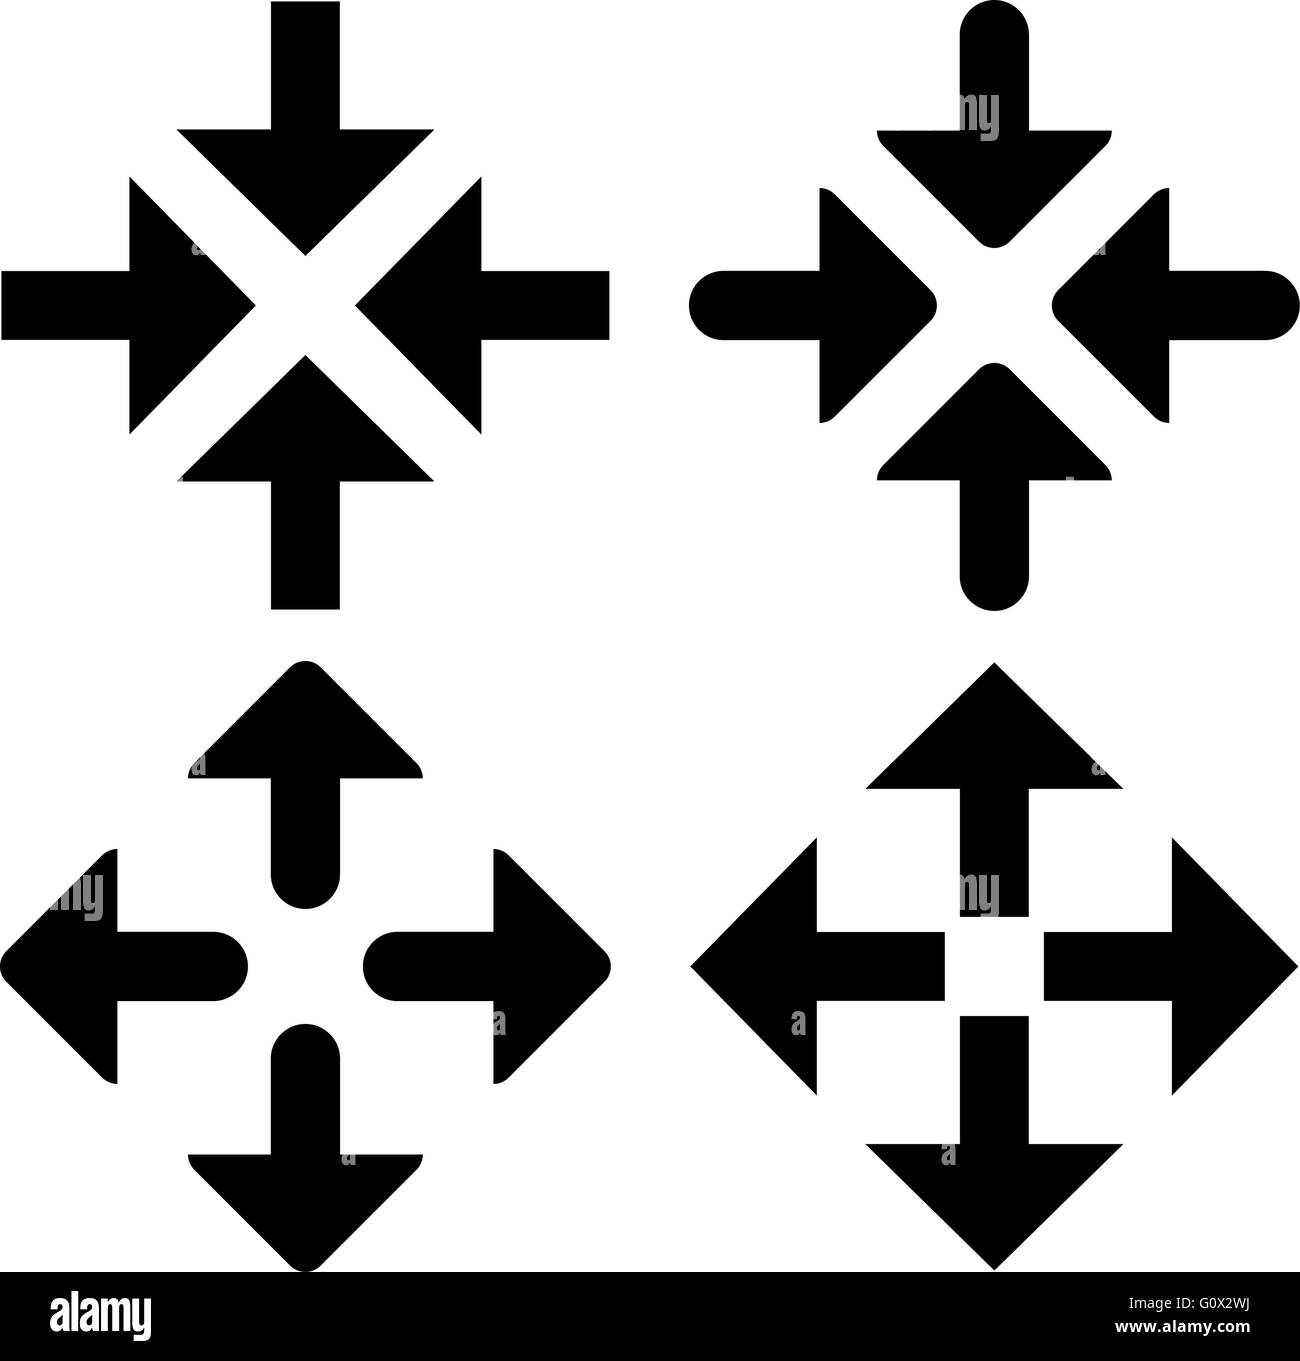 Collection of black arrow symbols Stock Vector